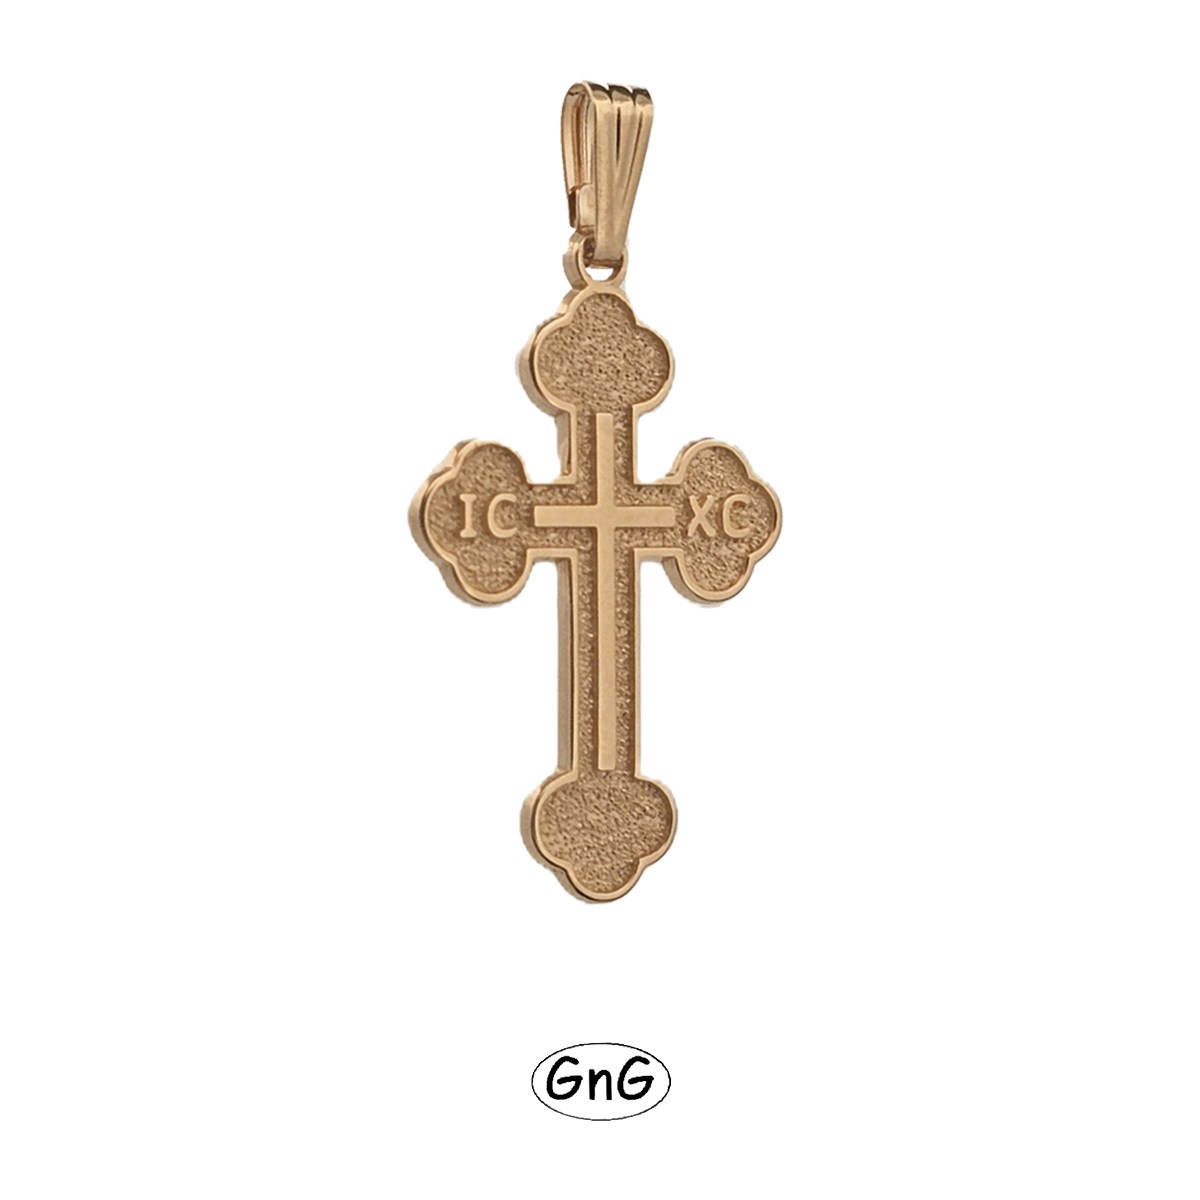 GE20, Gold Orthodox Cross, IC XC, GnG Design